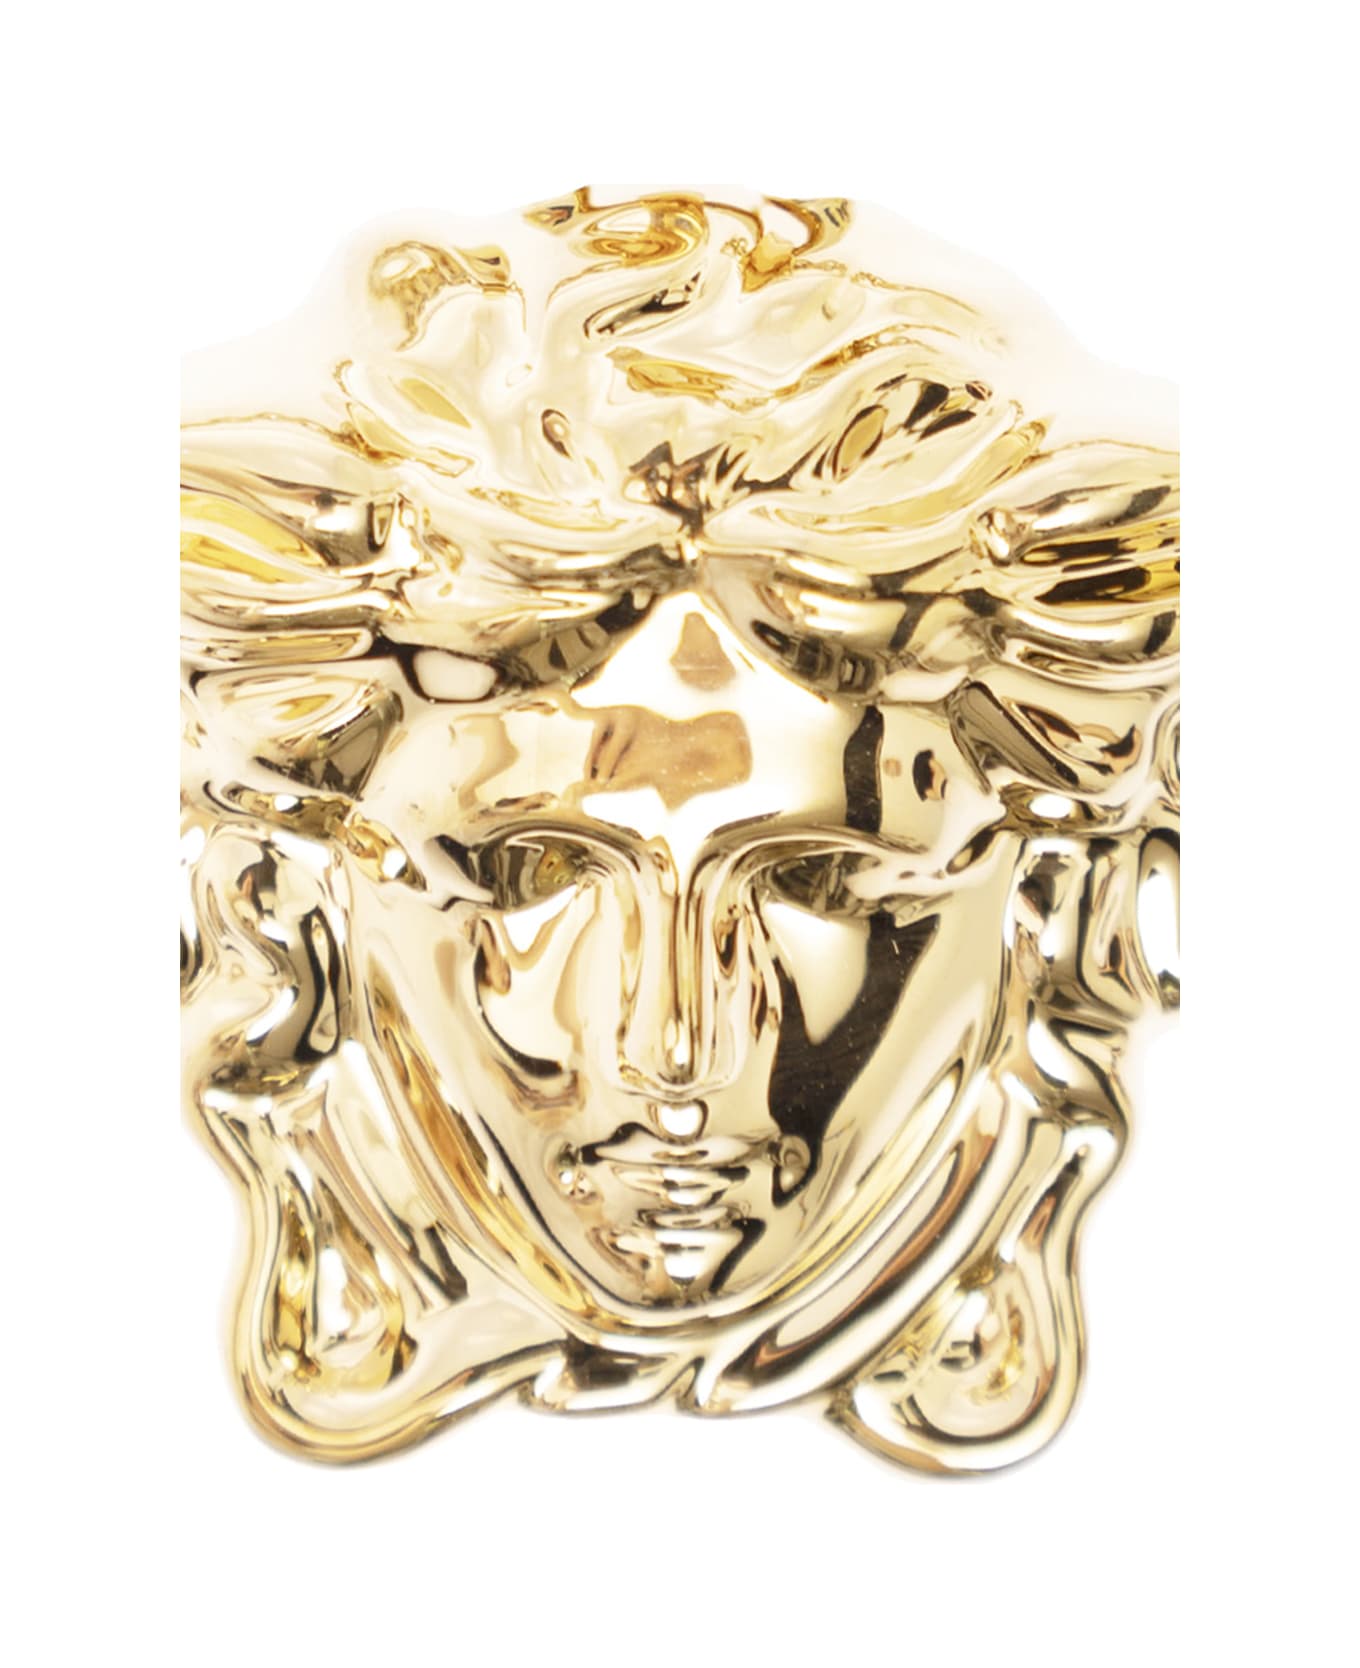 Versace Woman's Medusa Gold Metal Earrings - Metallic